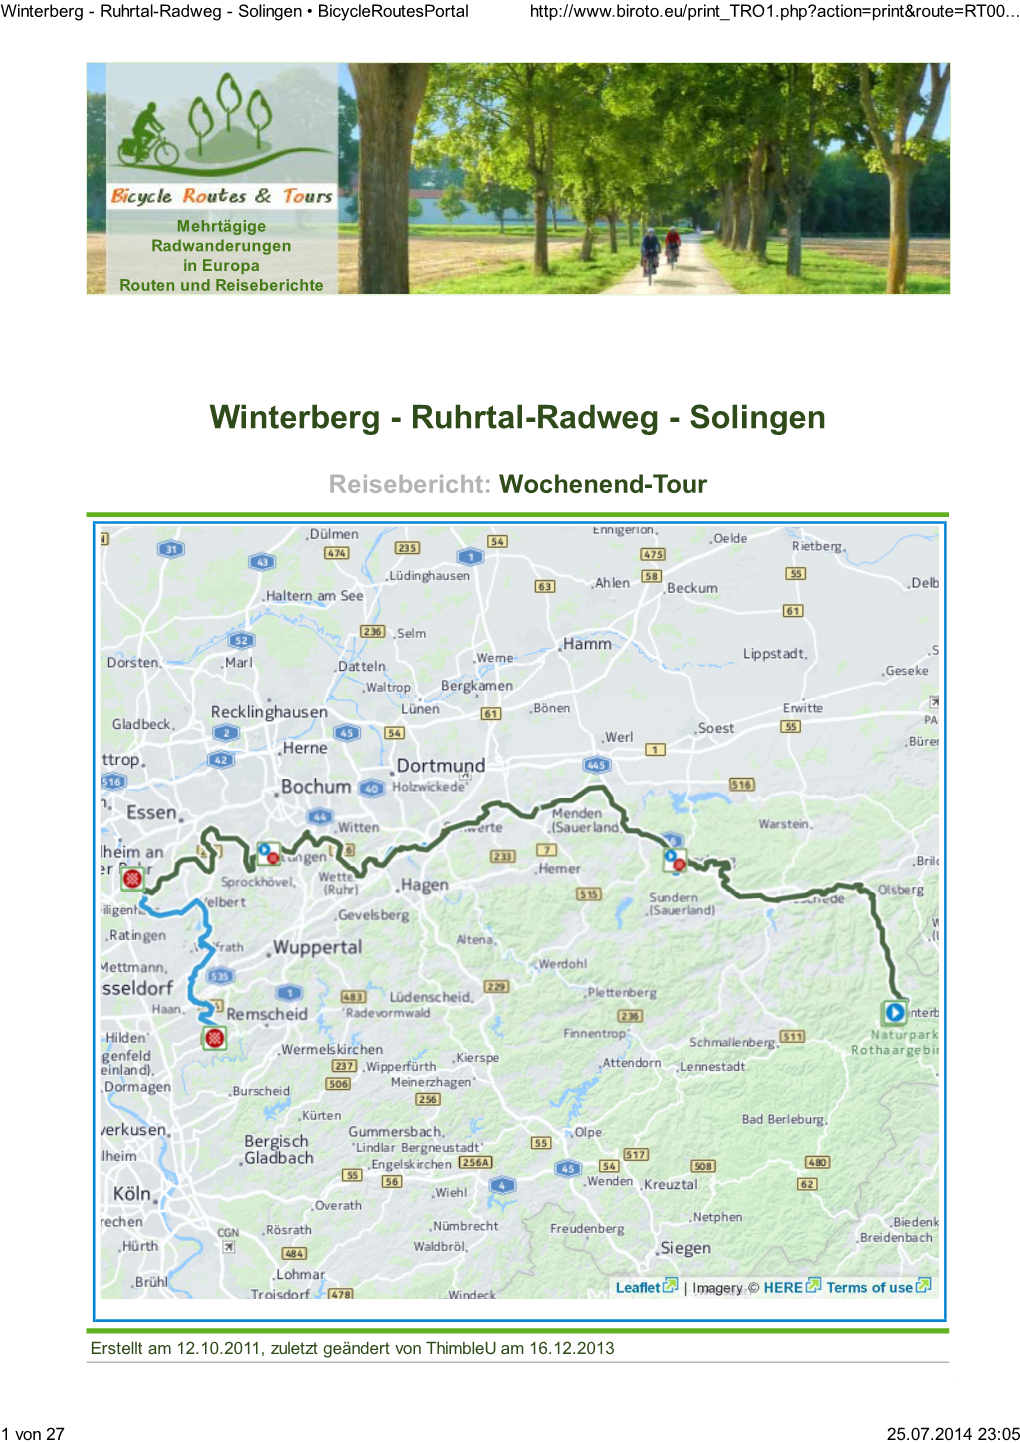 Winterberg - Ruhrtal-Radweg - Solingen • Bicycleroutesportal